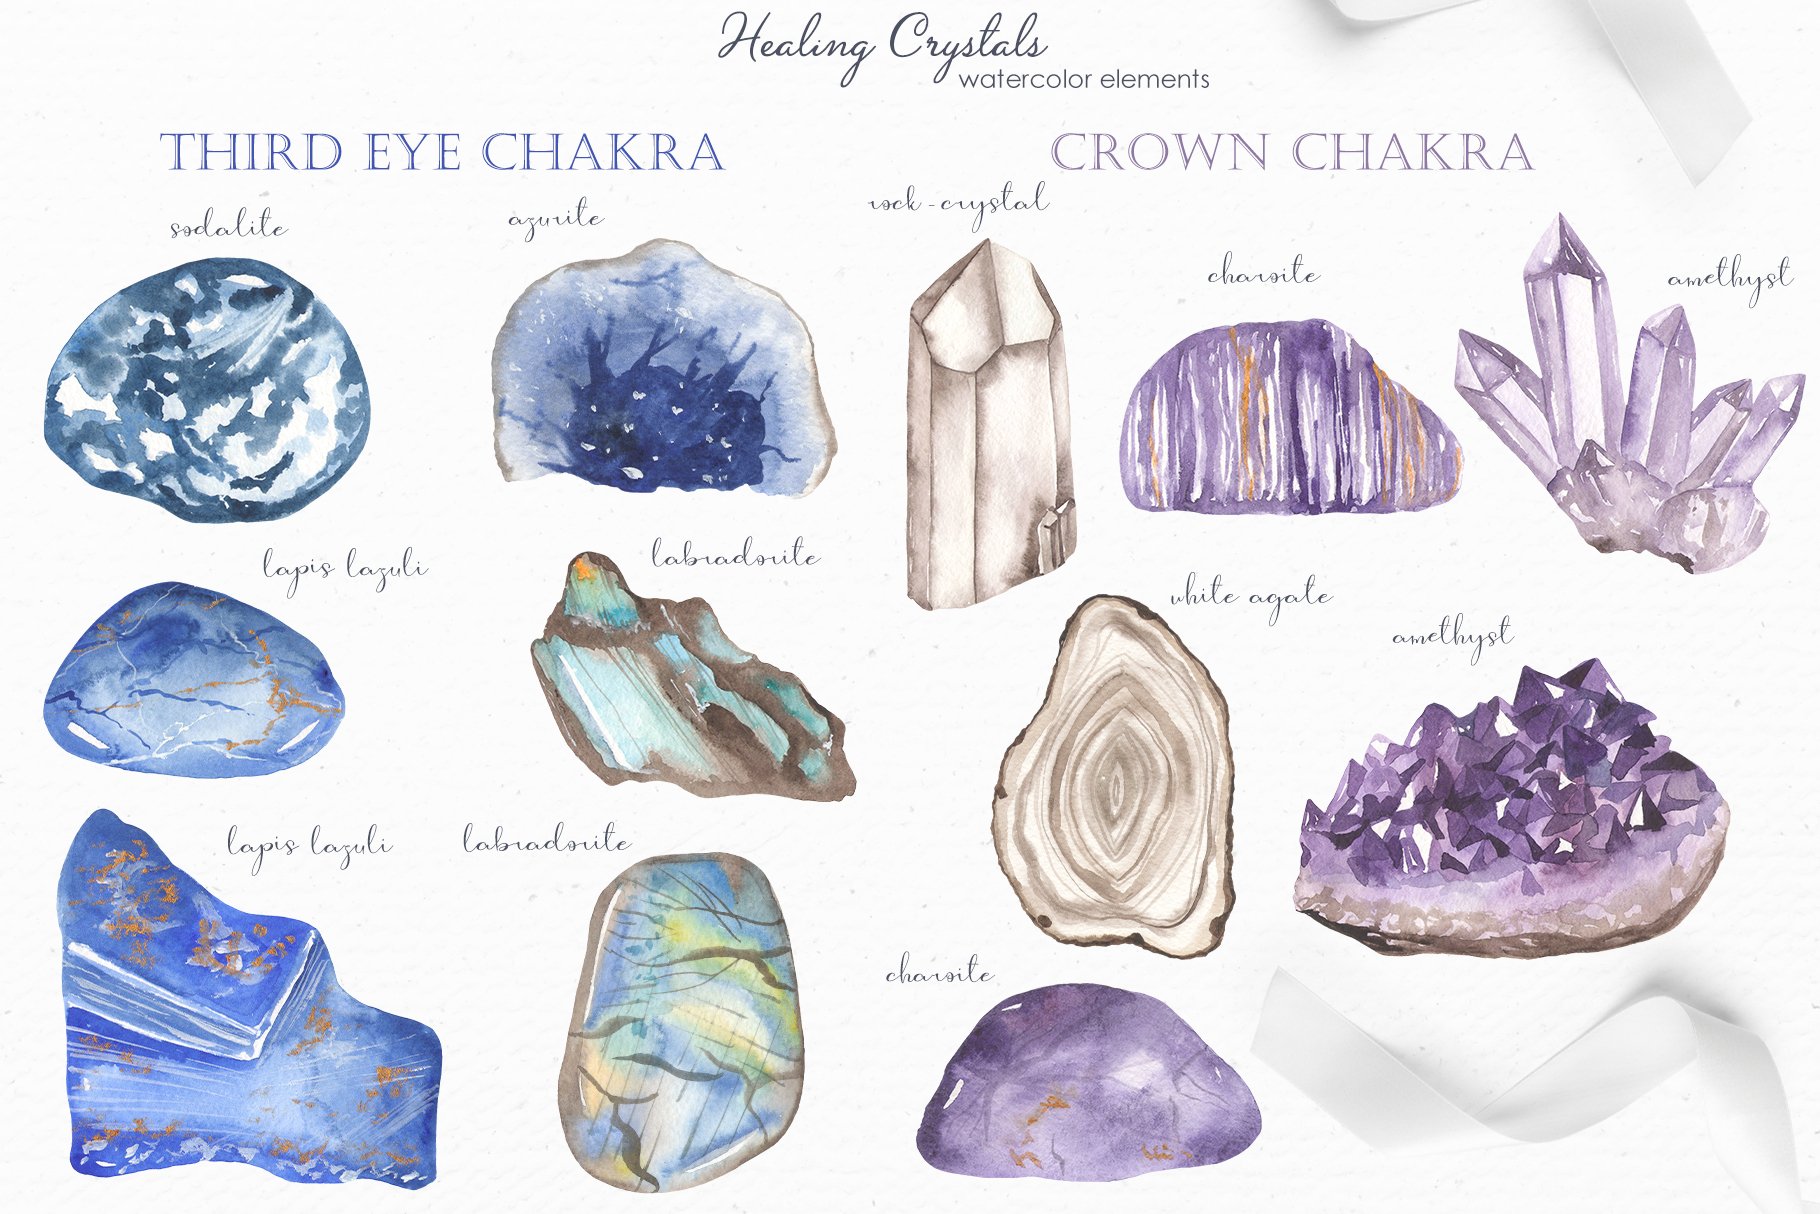 4 healing crystals watercolor elements 224